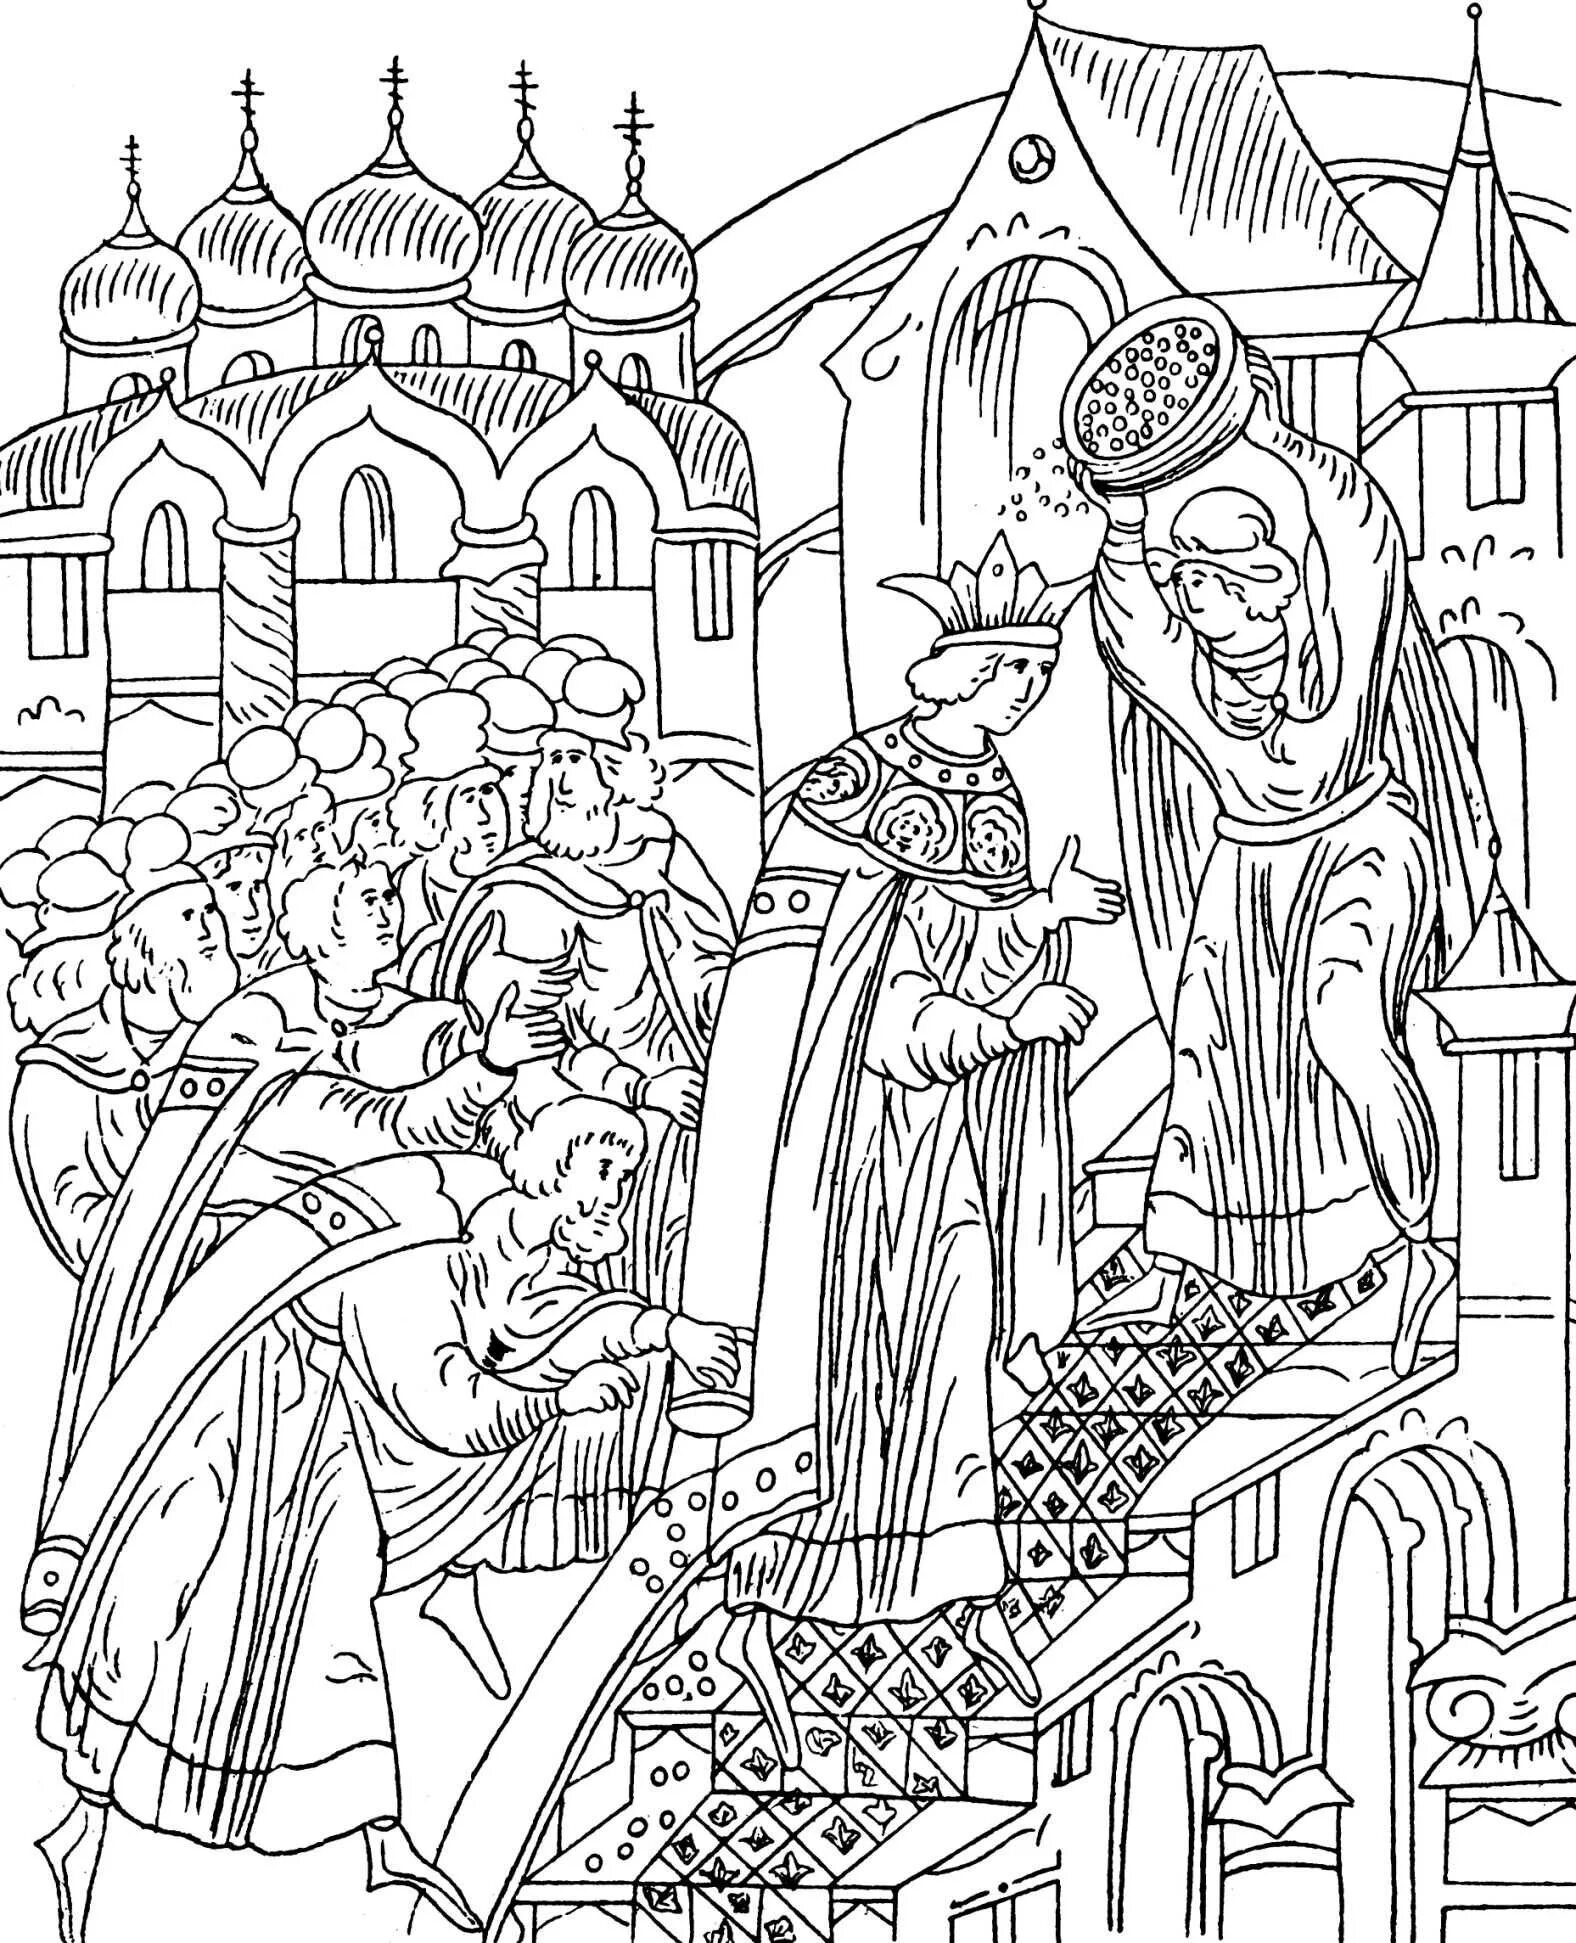 Царство ивана. 1547 Венчание Ивана Грозного на царство. Венчание на царство Ивана IV Грозного. 1547 Венчание Ивана Грозного. Венчание Ивана IV Грозного на царство - 1547 г.